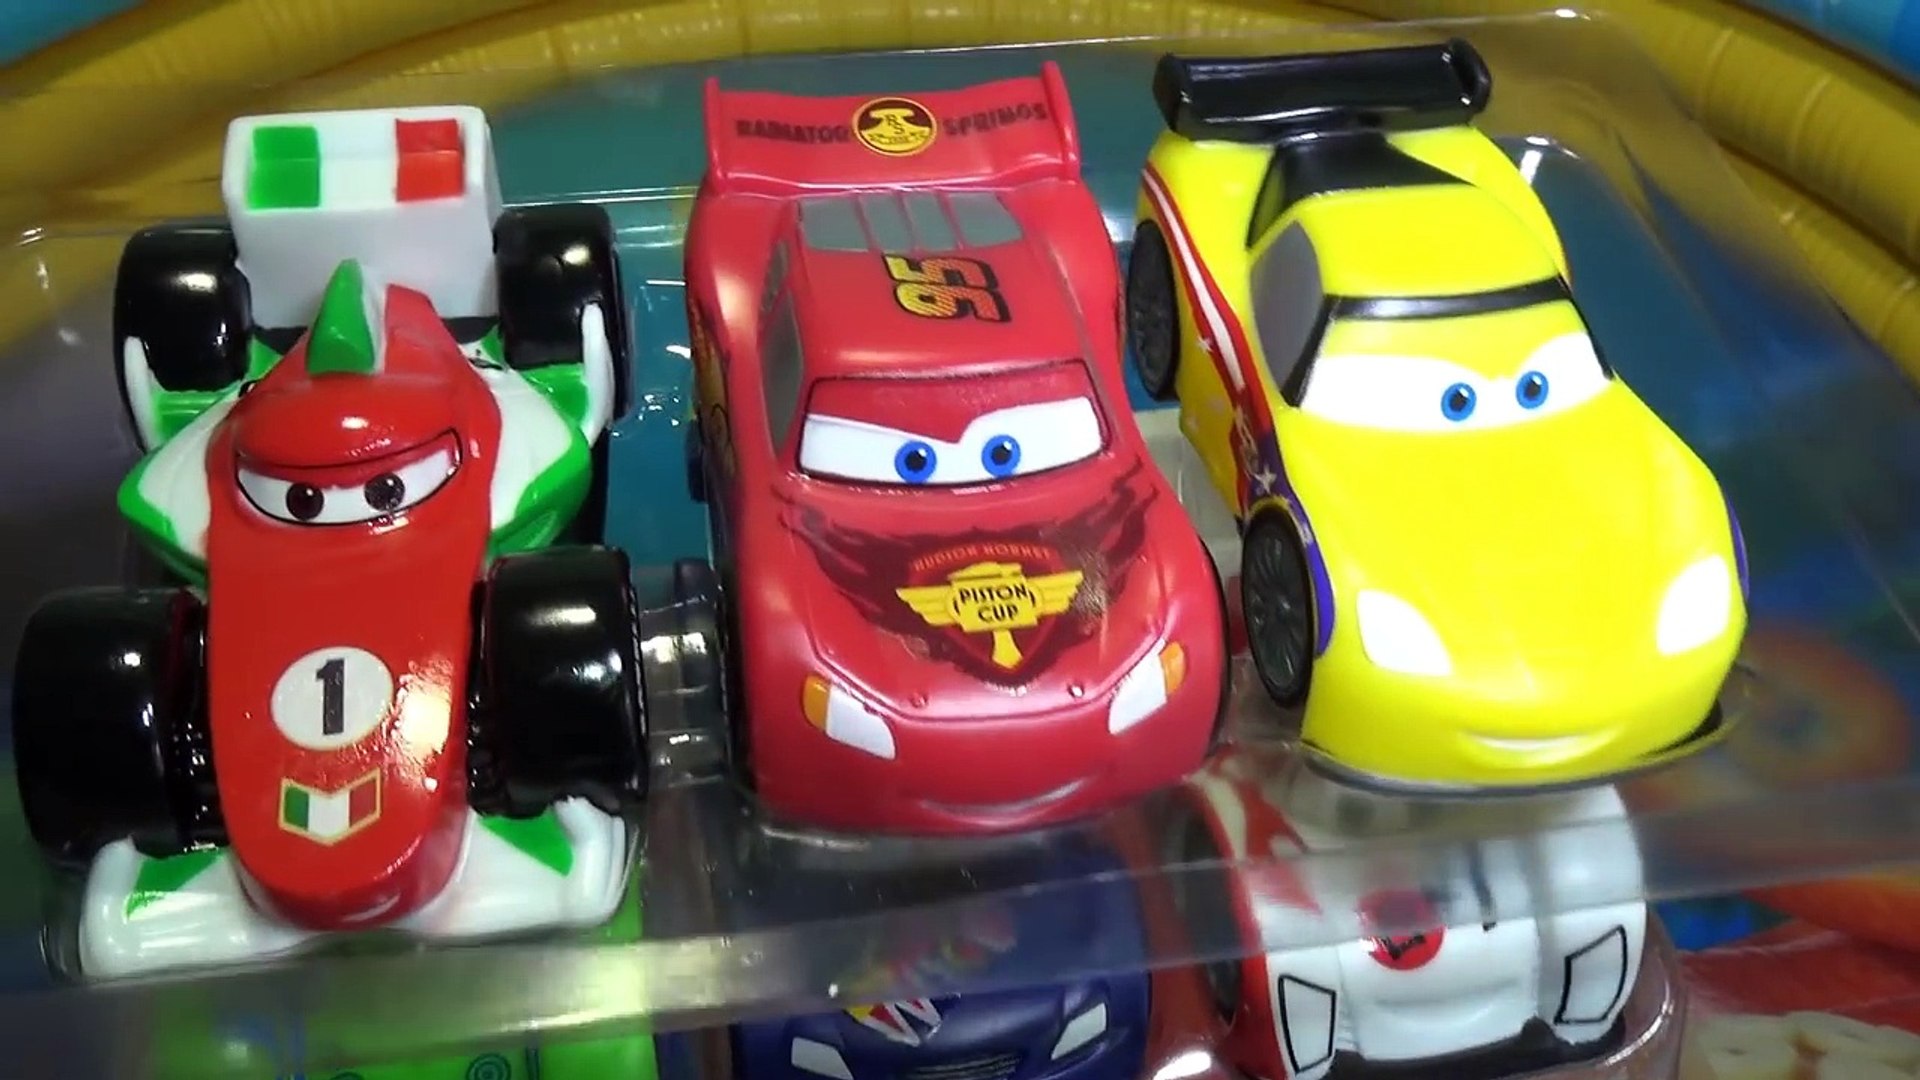 Disney Cars bath toys Disney Store Six Disney cars Lightning McQueen